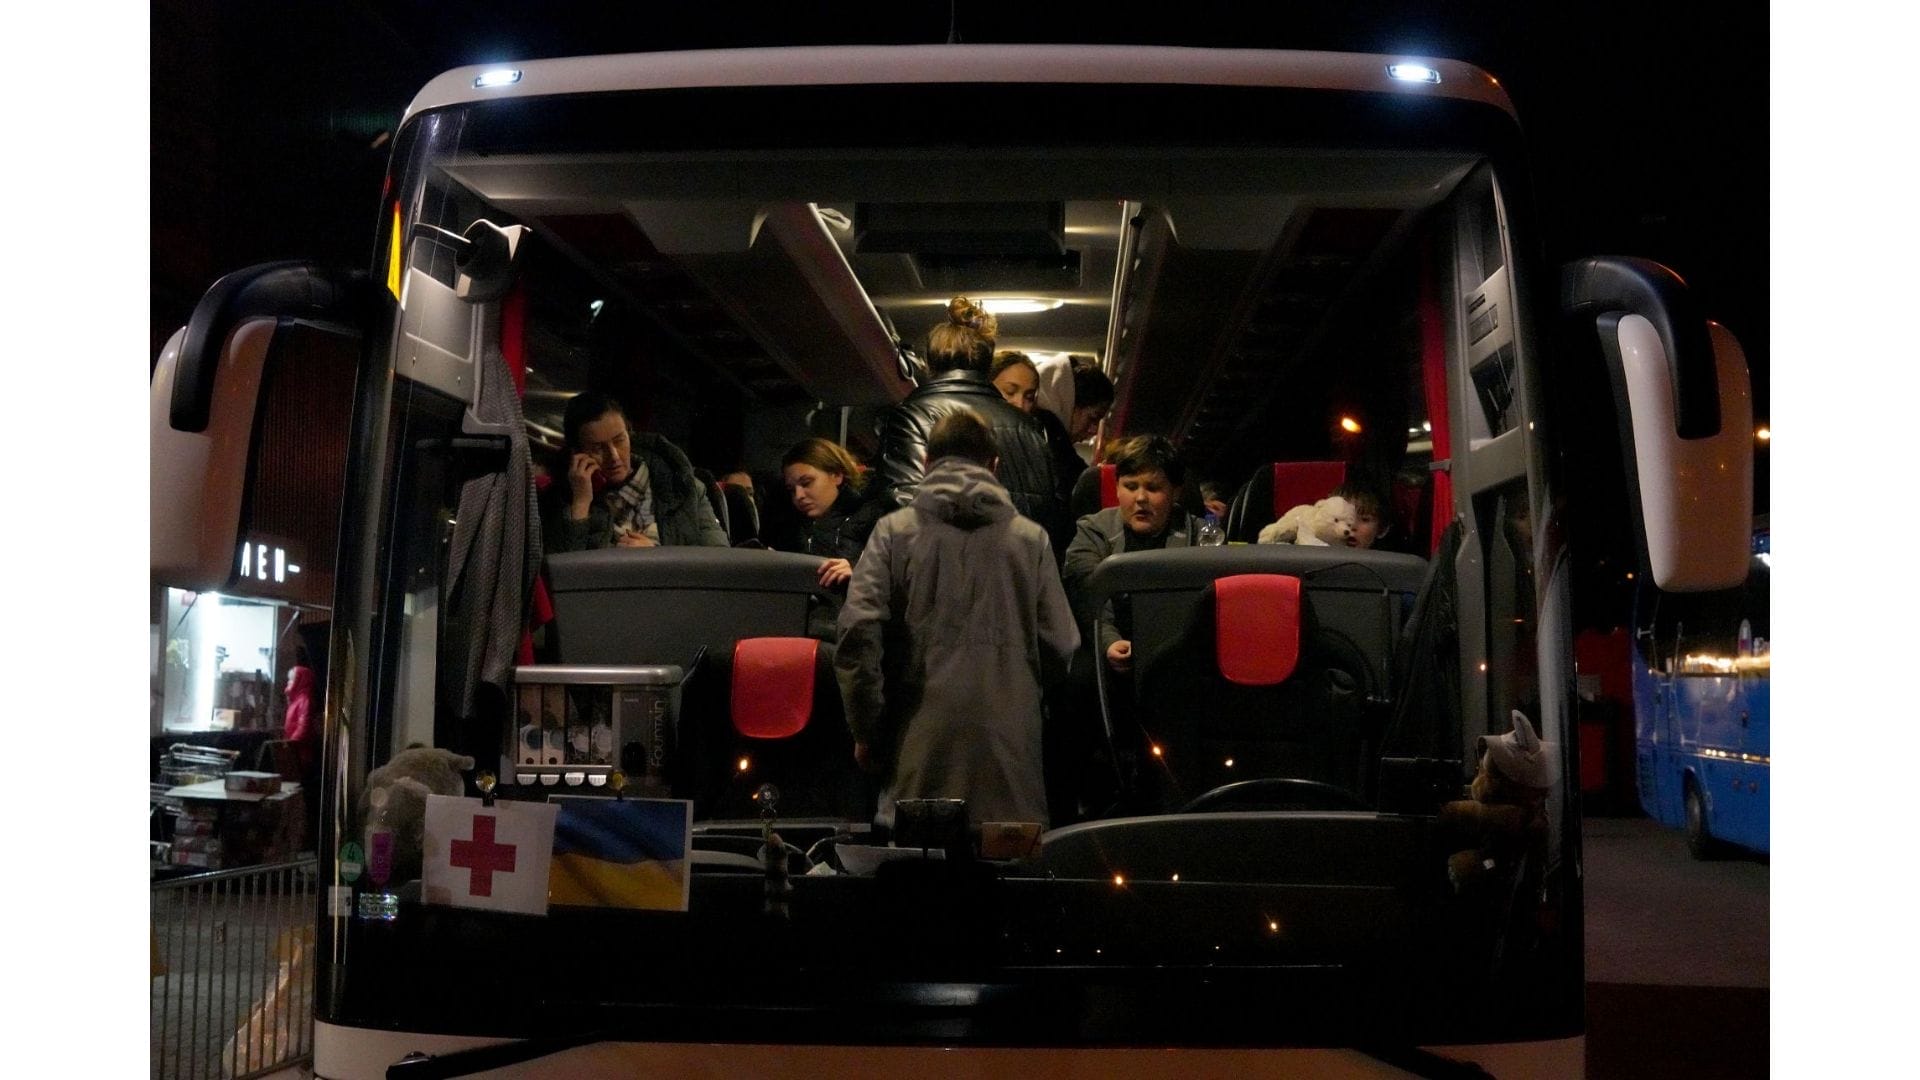 Ukrainian refugees on a bus as seen through a bus window.